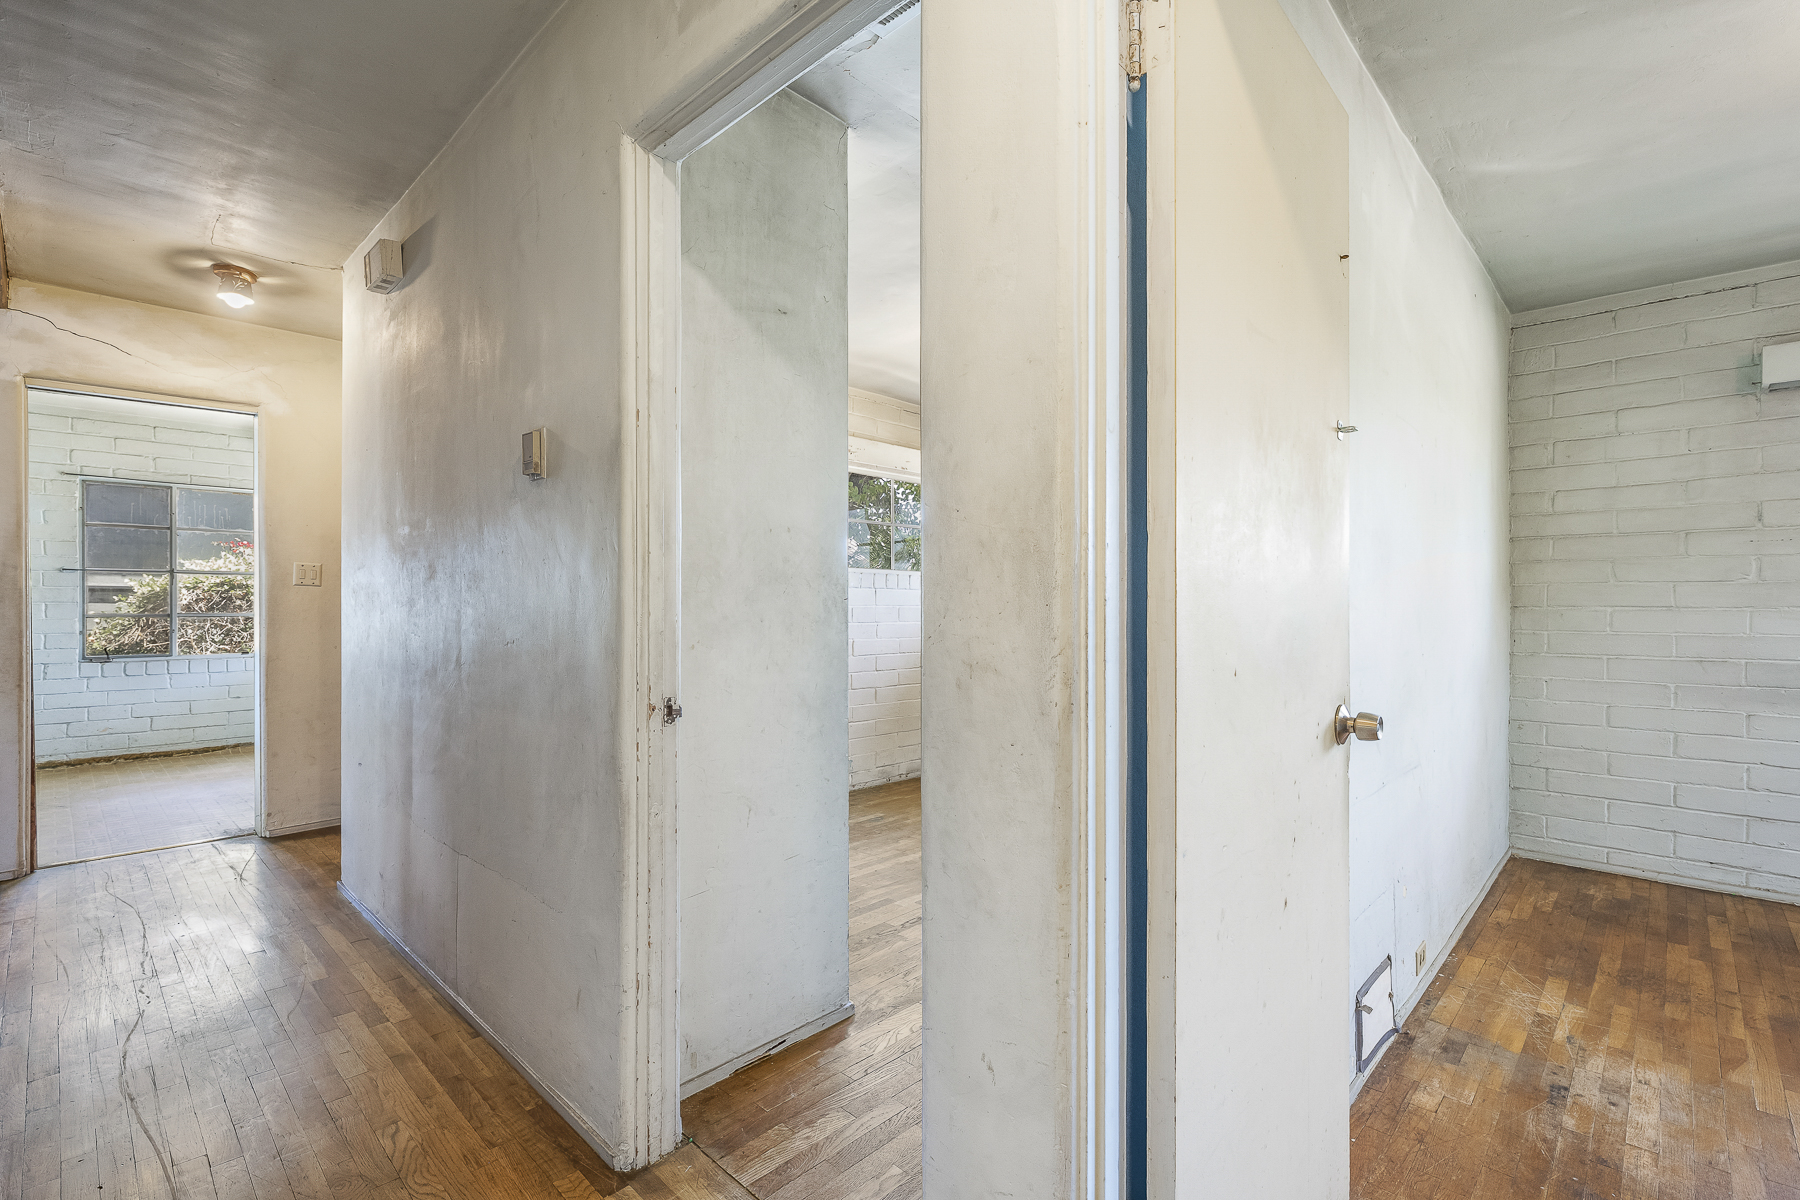 319 E. Francis Ave, La Habra, CA 90631: Interior hallway to three white brick rooms shot.